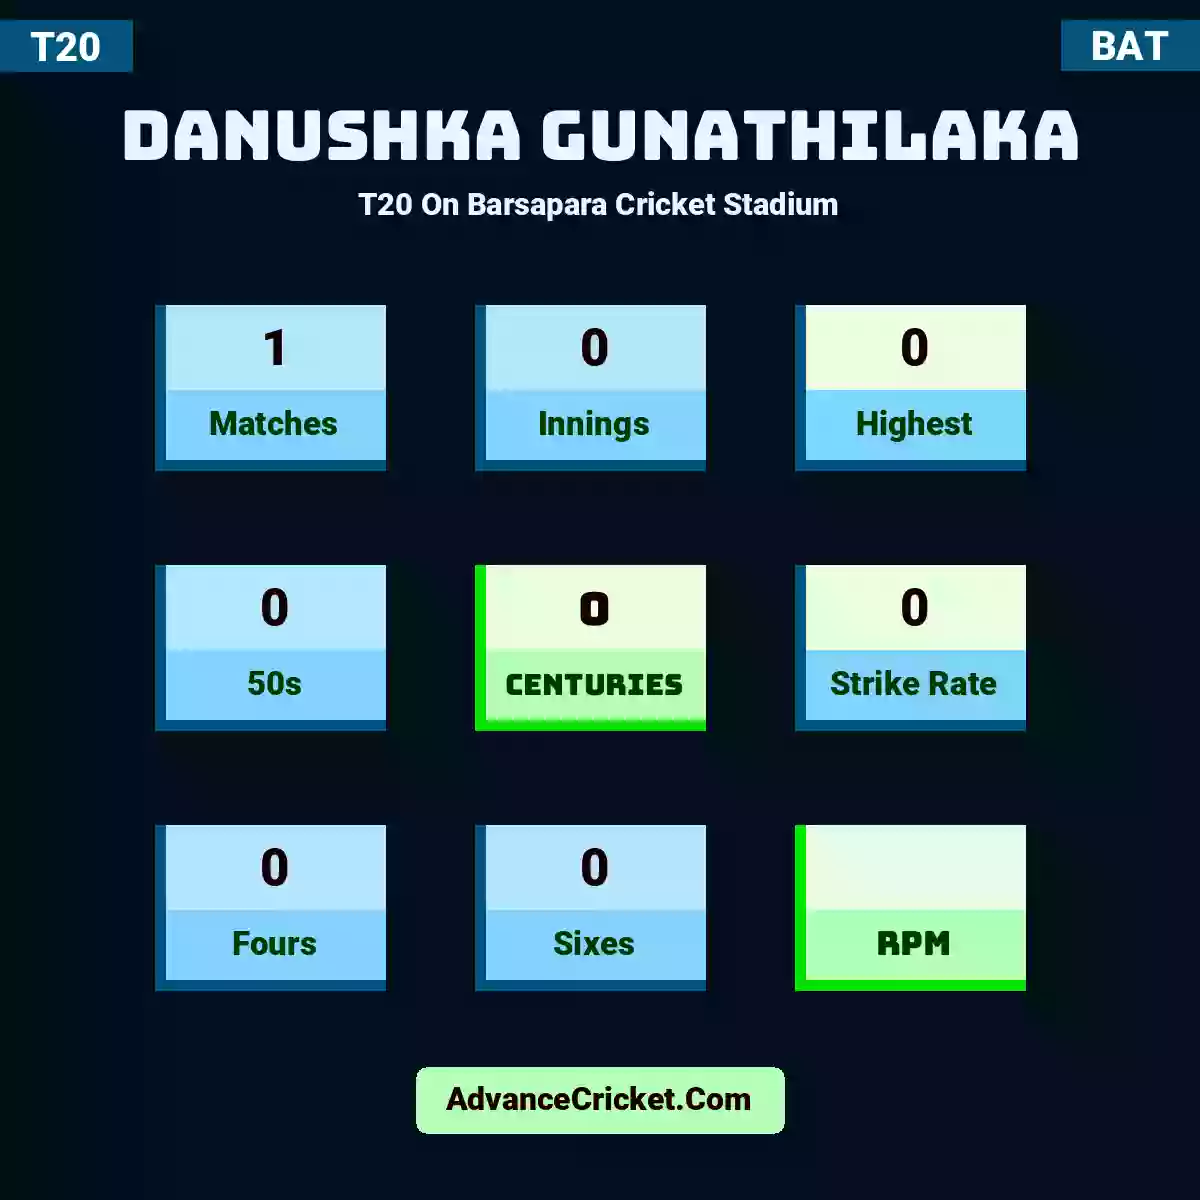 Danushka Gunathilaka T20  On Barsapara Cricket Stadium, Danushka Gunathilaka played 1 matches, scored 0 runs as highest, 0 half-centuries, and 0 centuries, with a strike rate of 0. D.Gunathilaka hit 0 fours and 0 sixes.